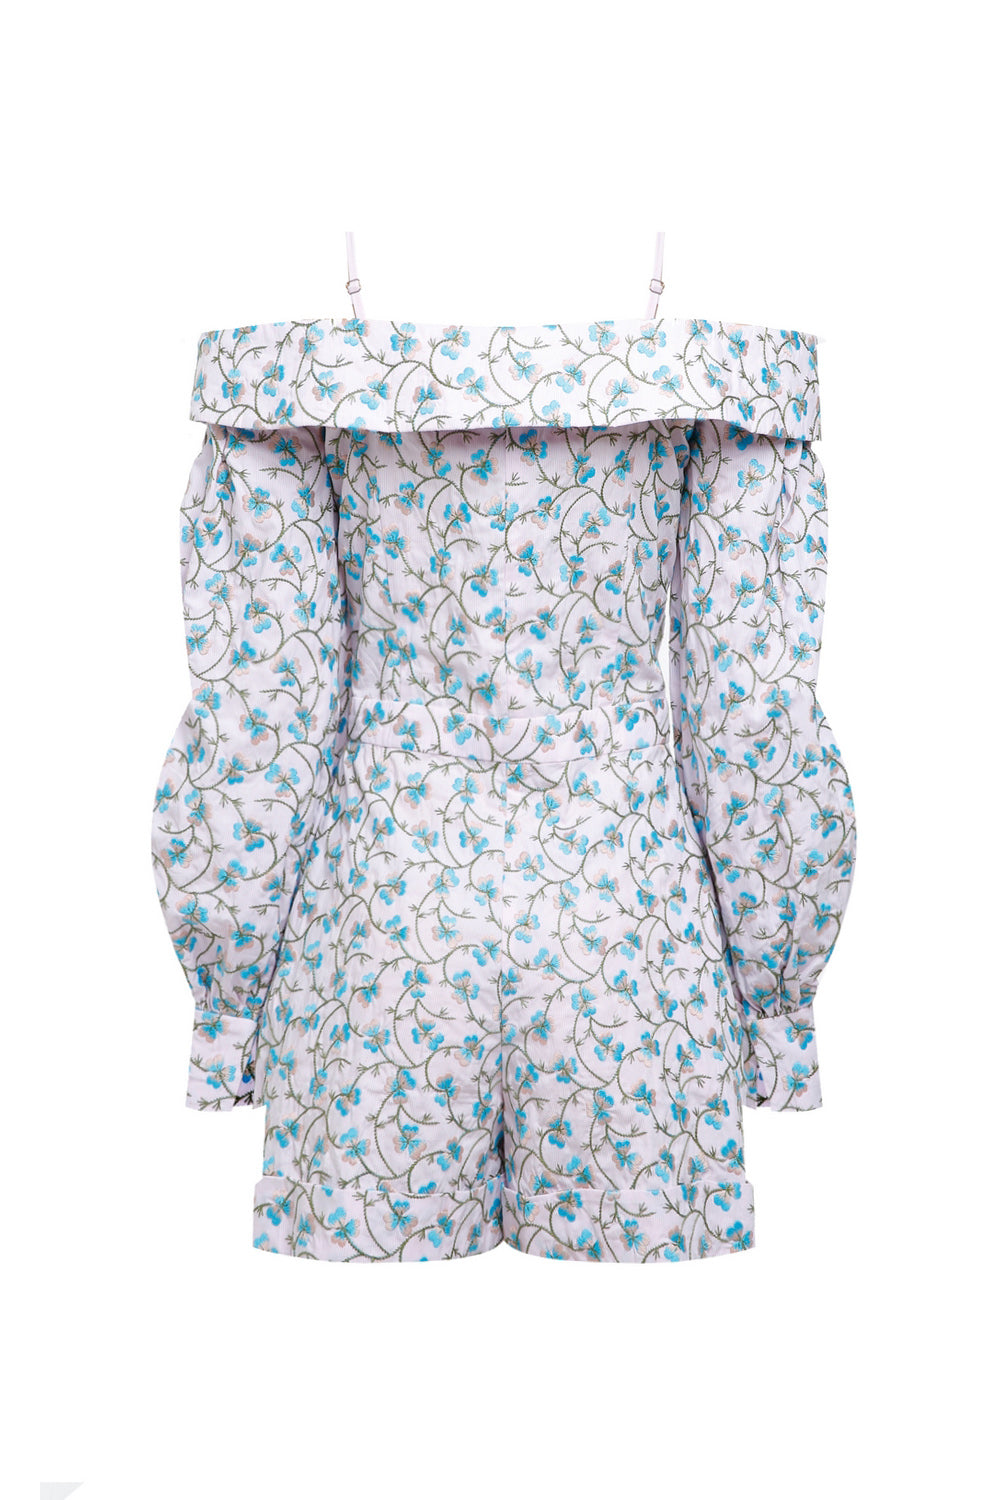 Allison Blue Floral Printed Mini Jumpsuit